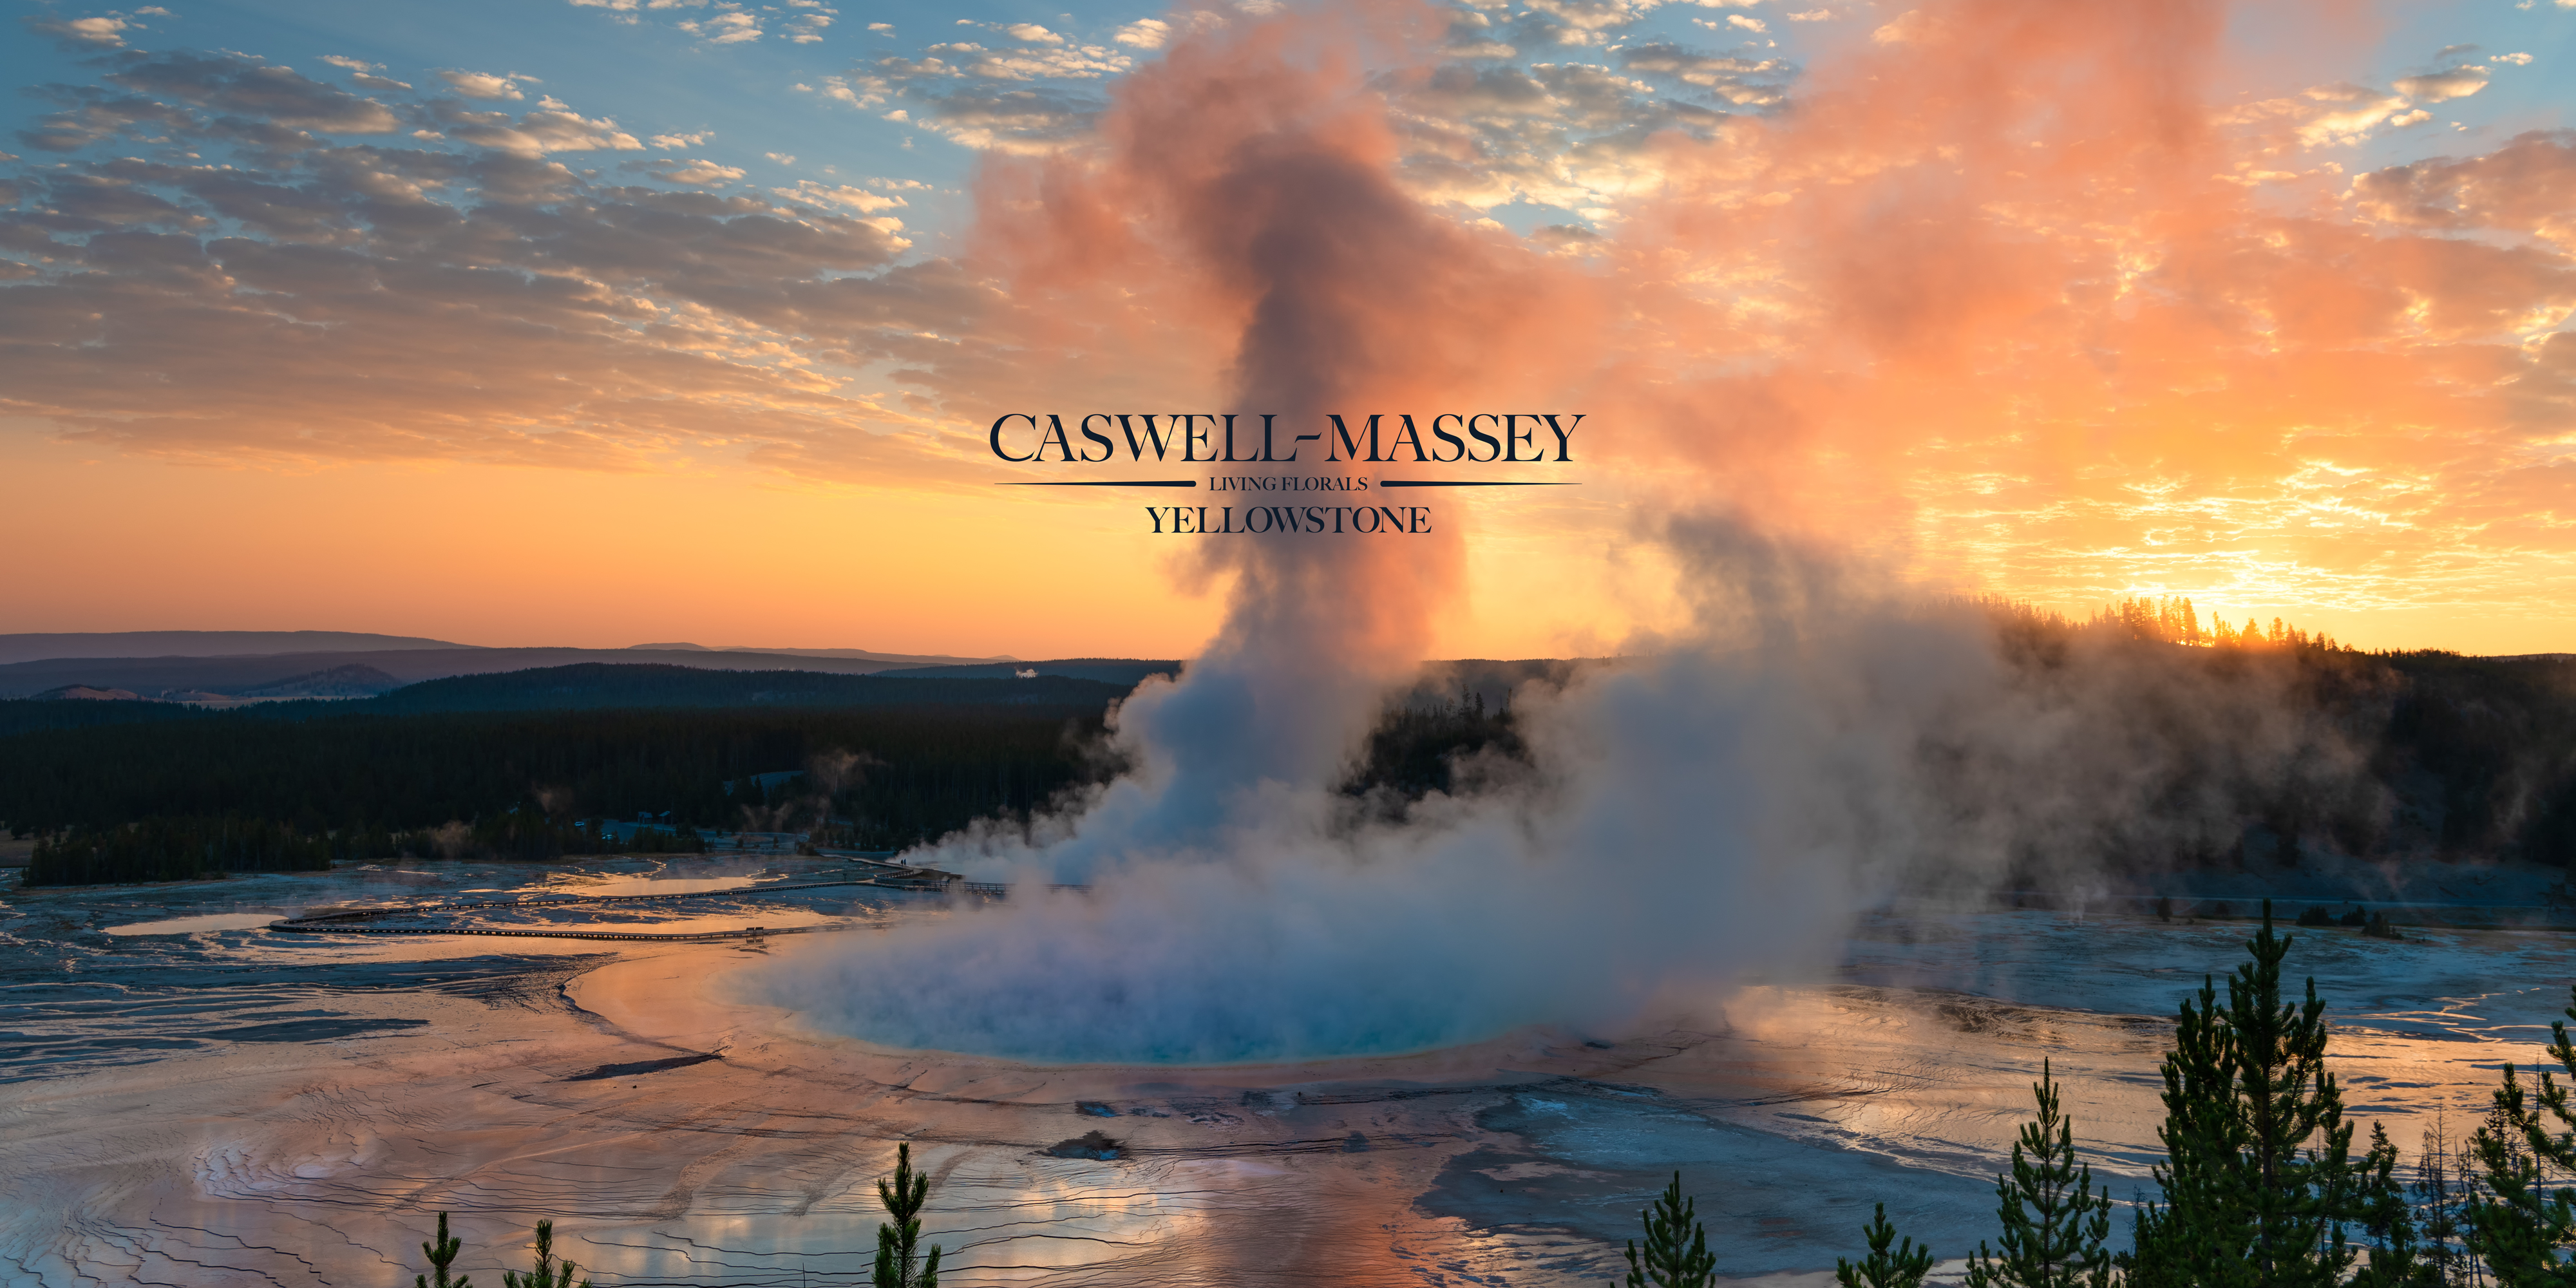 Caswell-Massey: Image of Old Faithful Geyser erupting